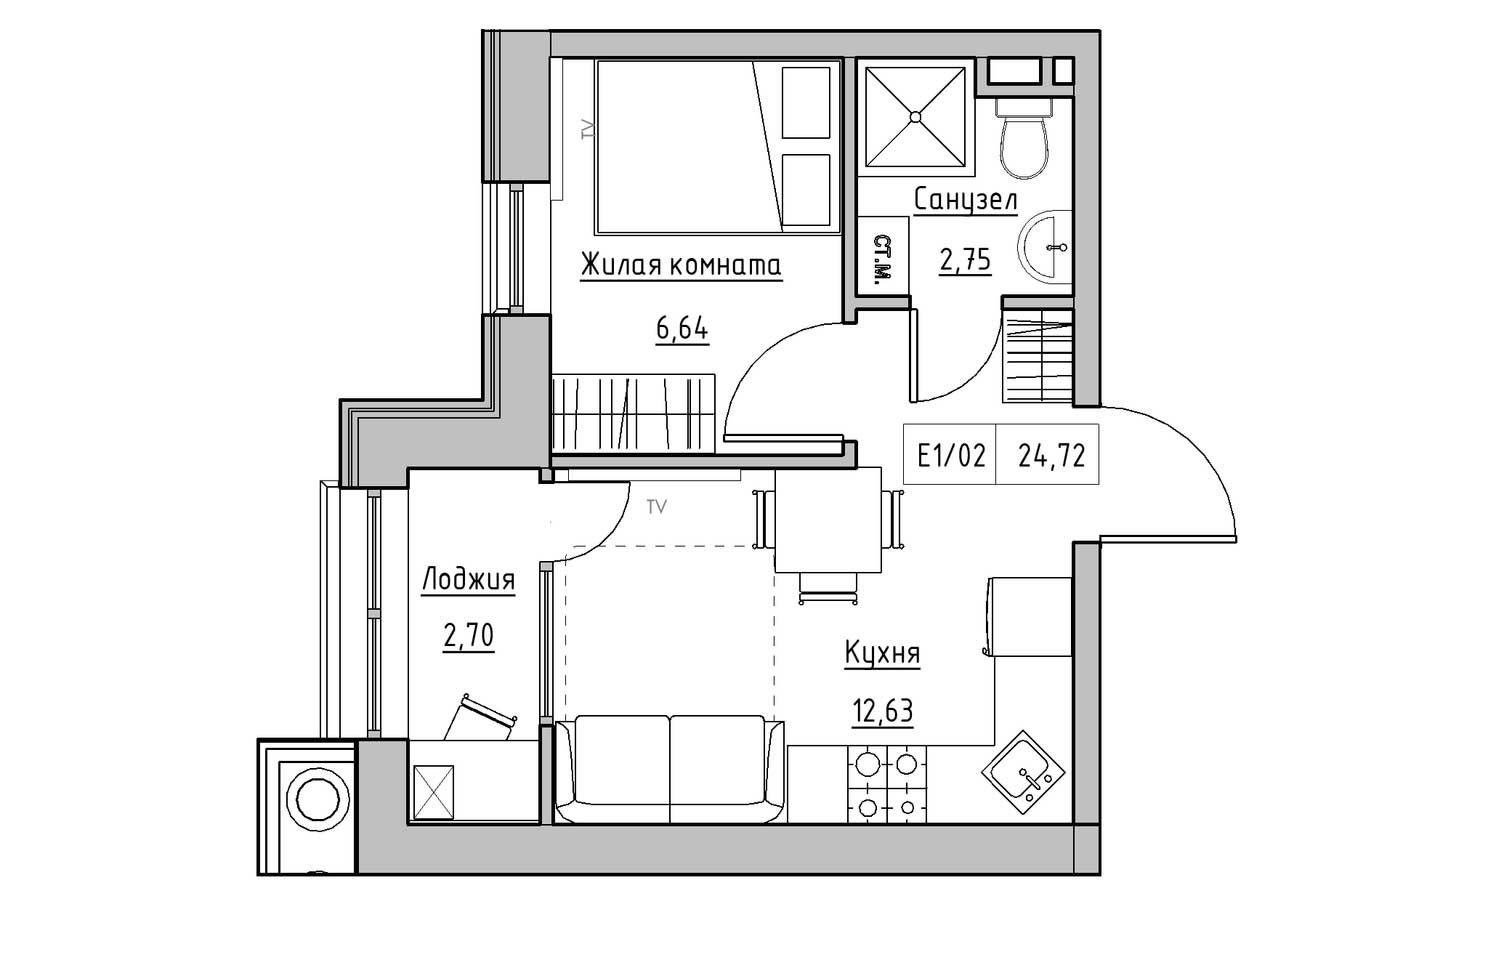 Planning 1-rm flats area 24.72m2, KS-010-01/0013.